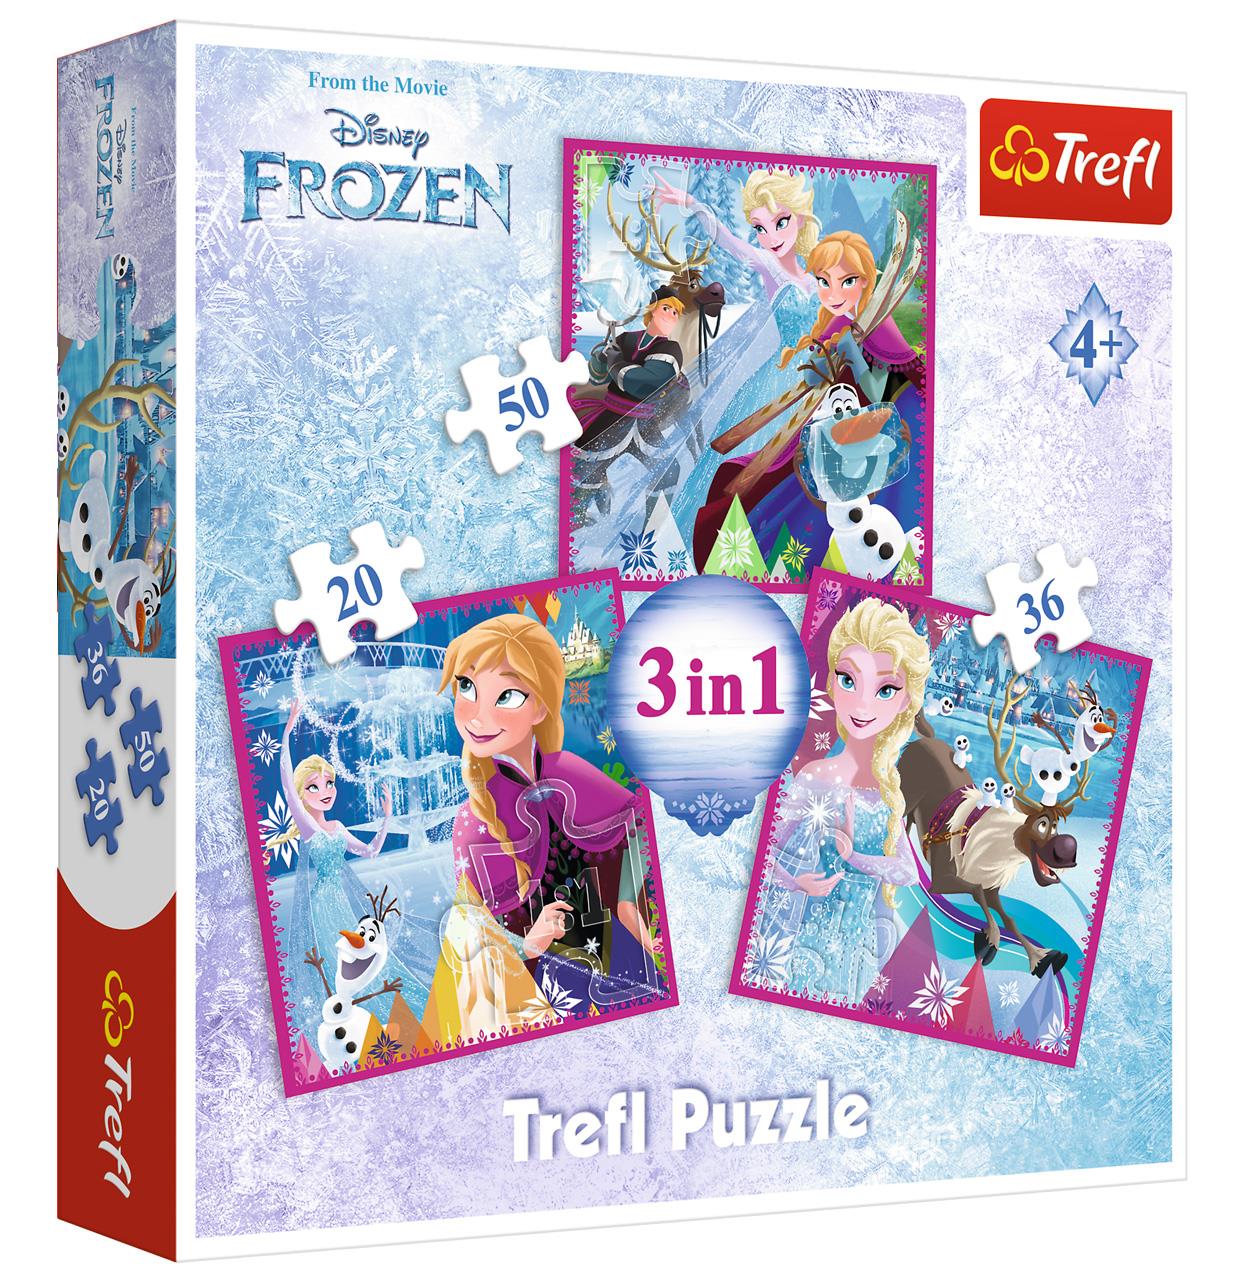 Trefl Çocuk Puzzle 34832 Frozen Winter Magic, Disney 20+36+50 Parça 3 in 1 Puzzle